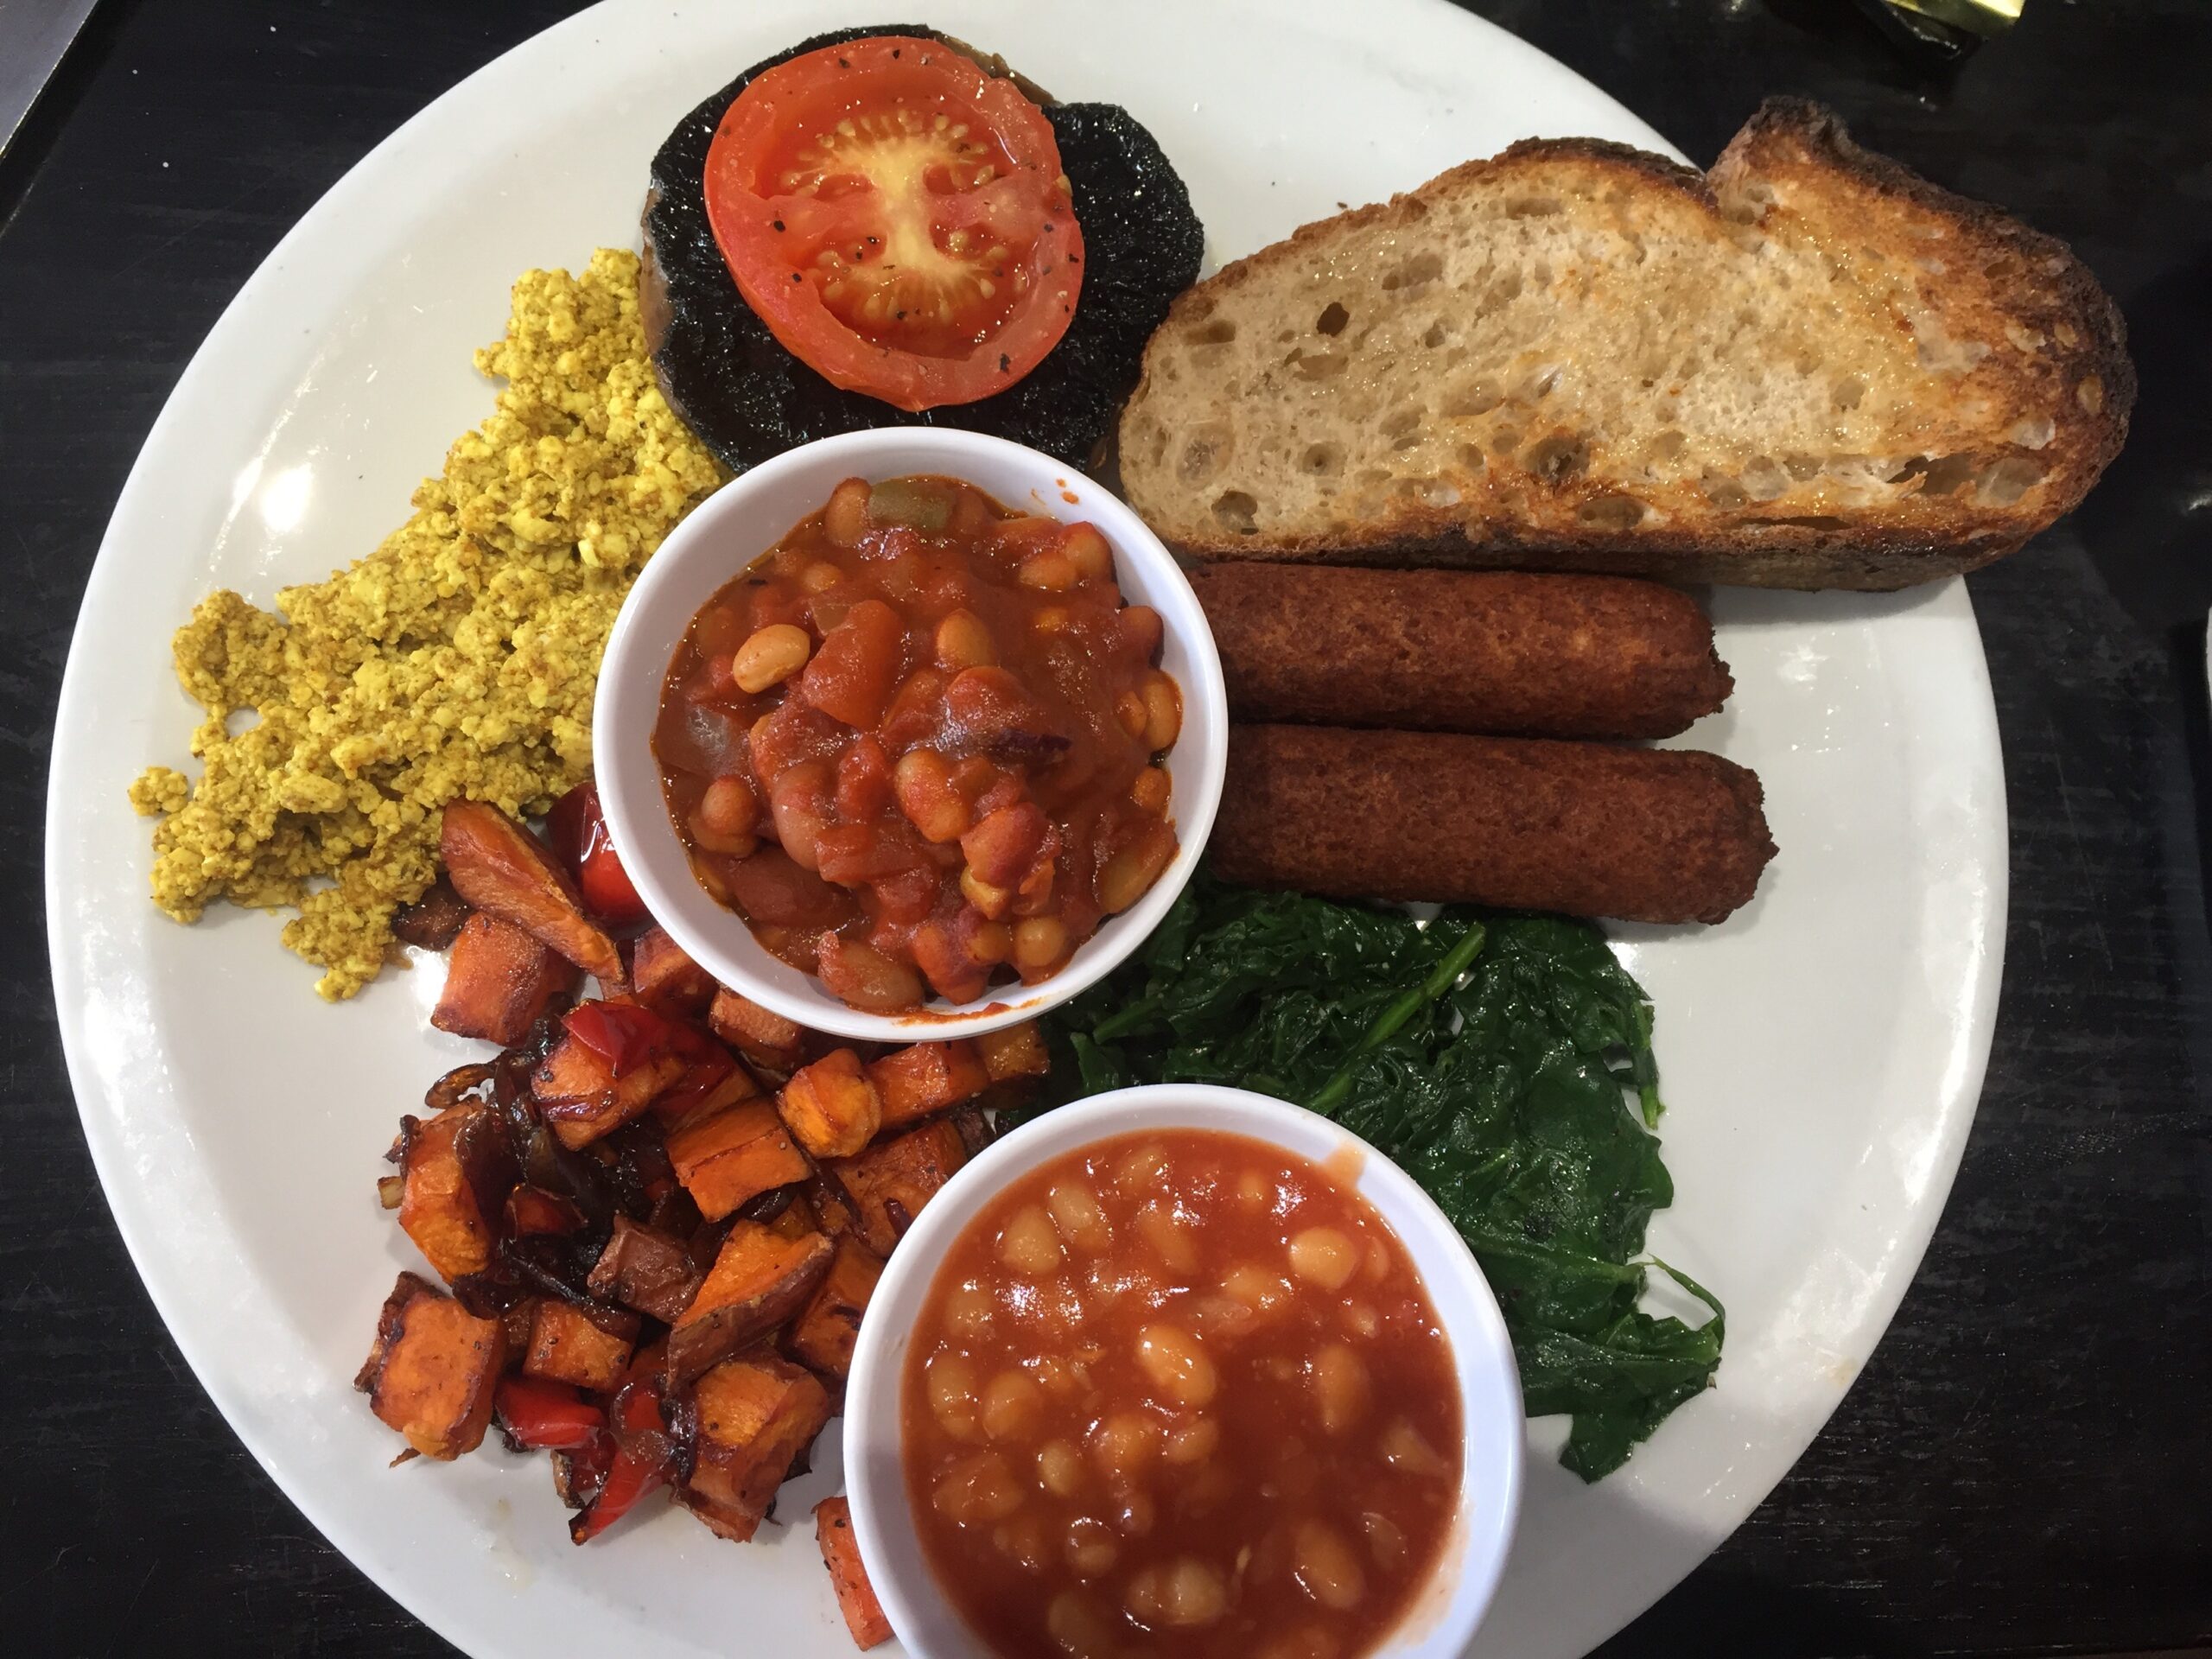 Vegan Breakfast Oxford Road Cafe